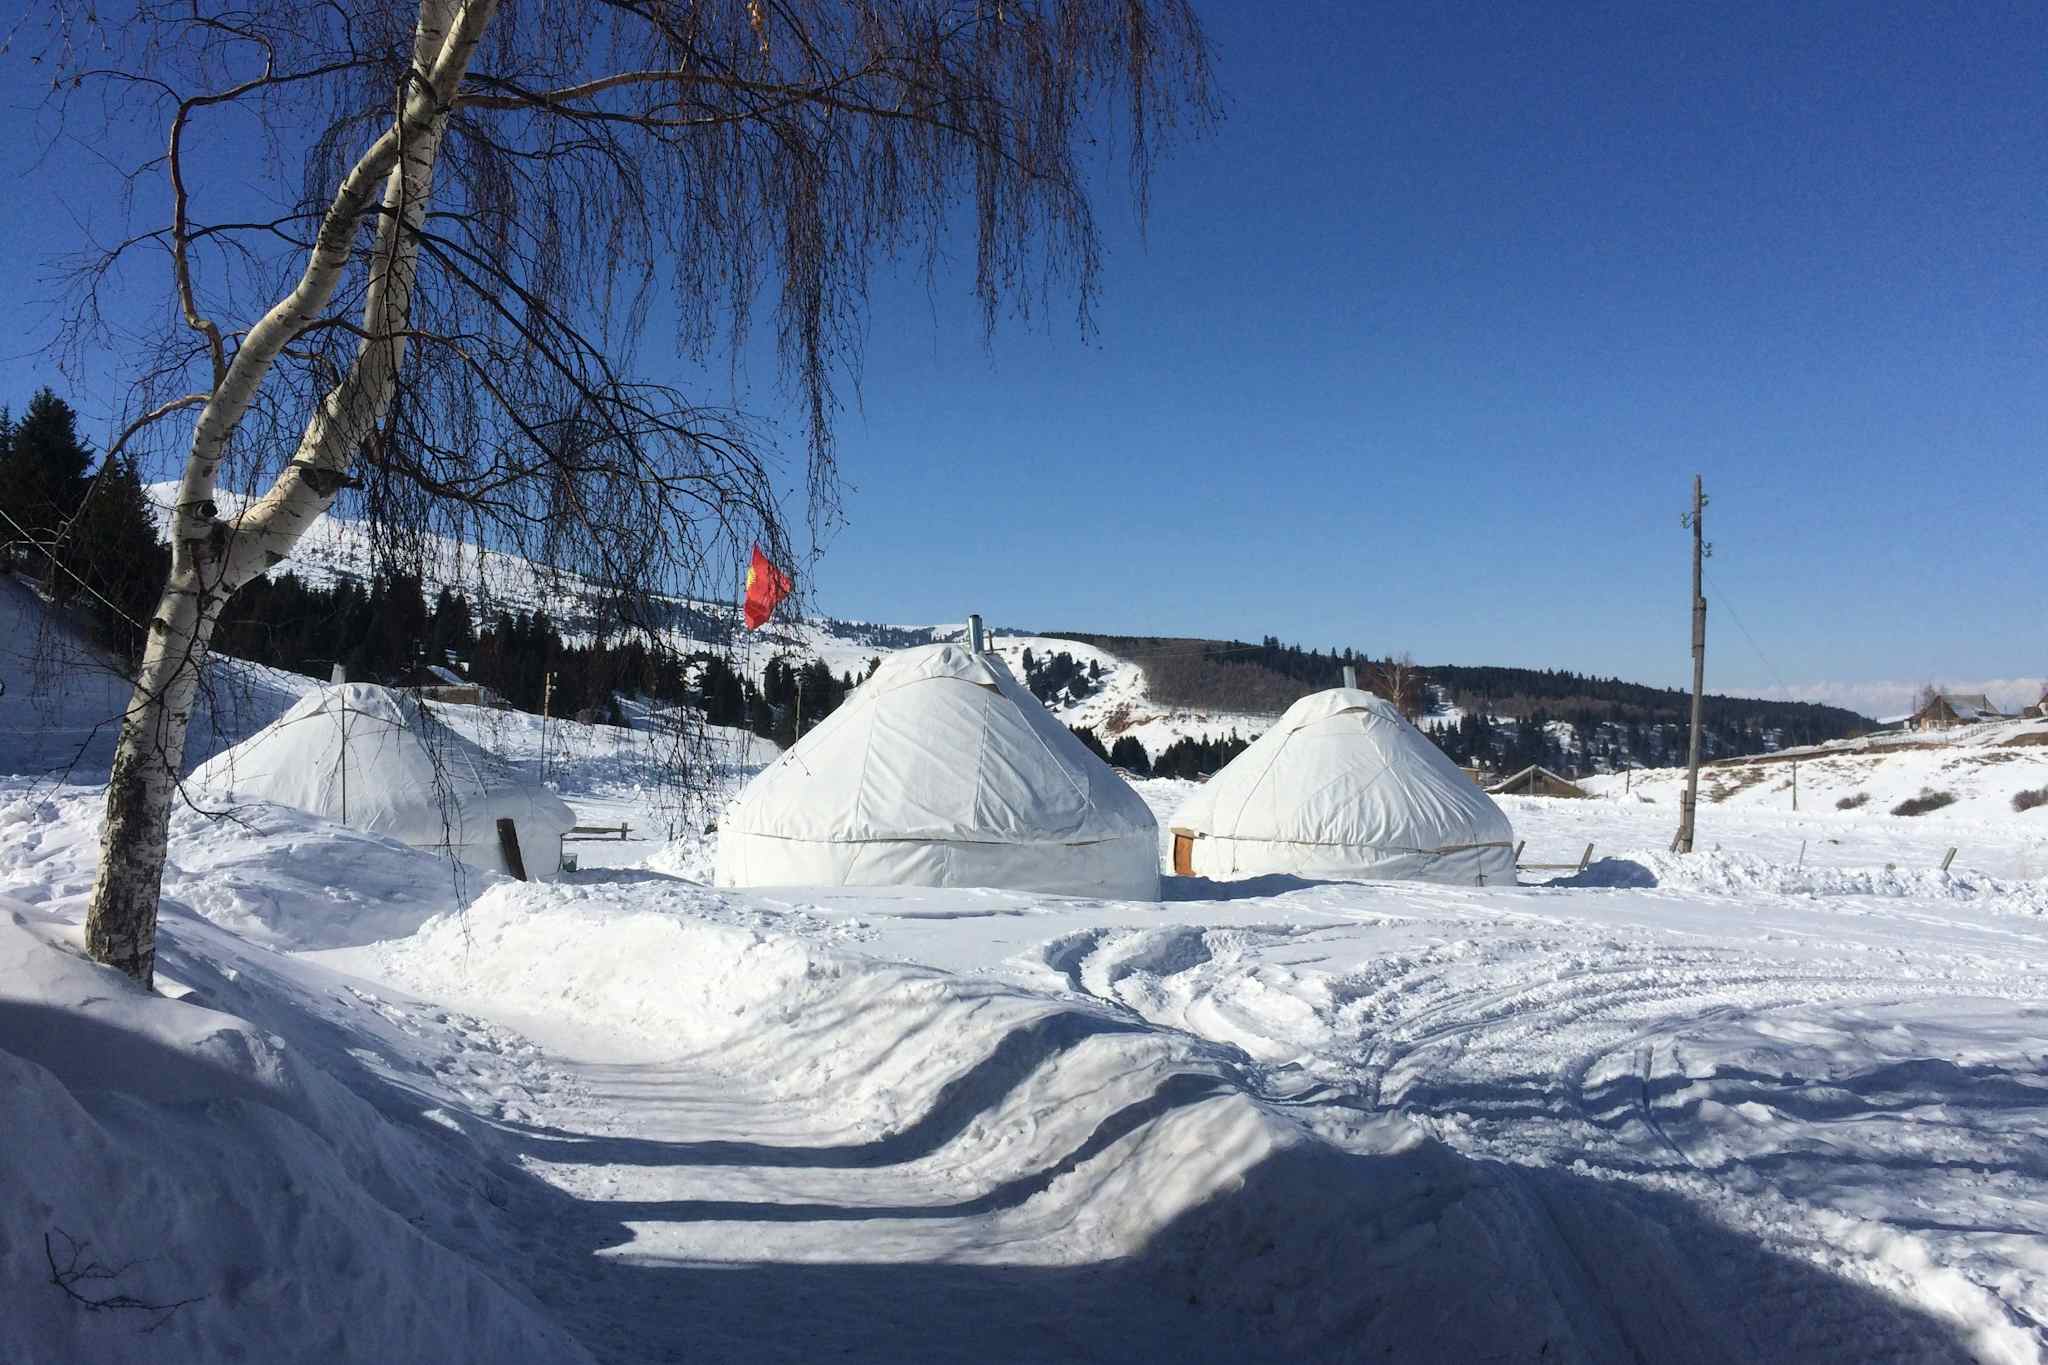 Three yurts in the snow at the Jyrgalan winter yurt camp, Kyrgyzstan